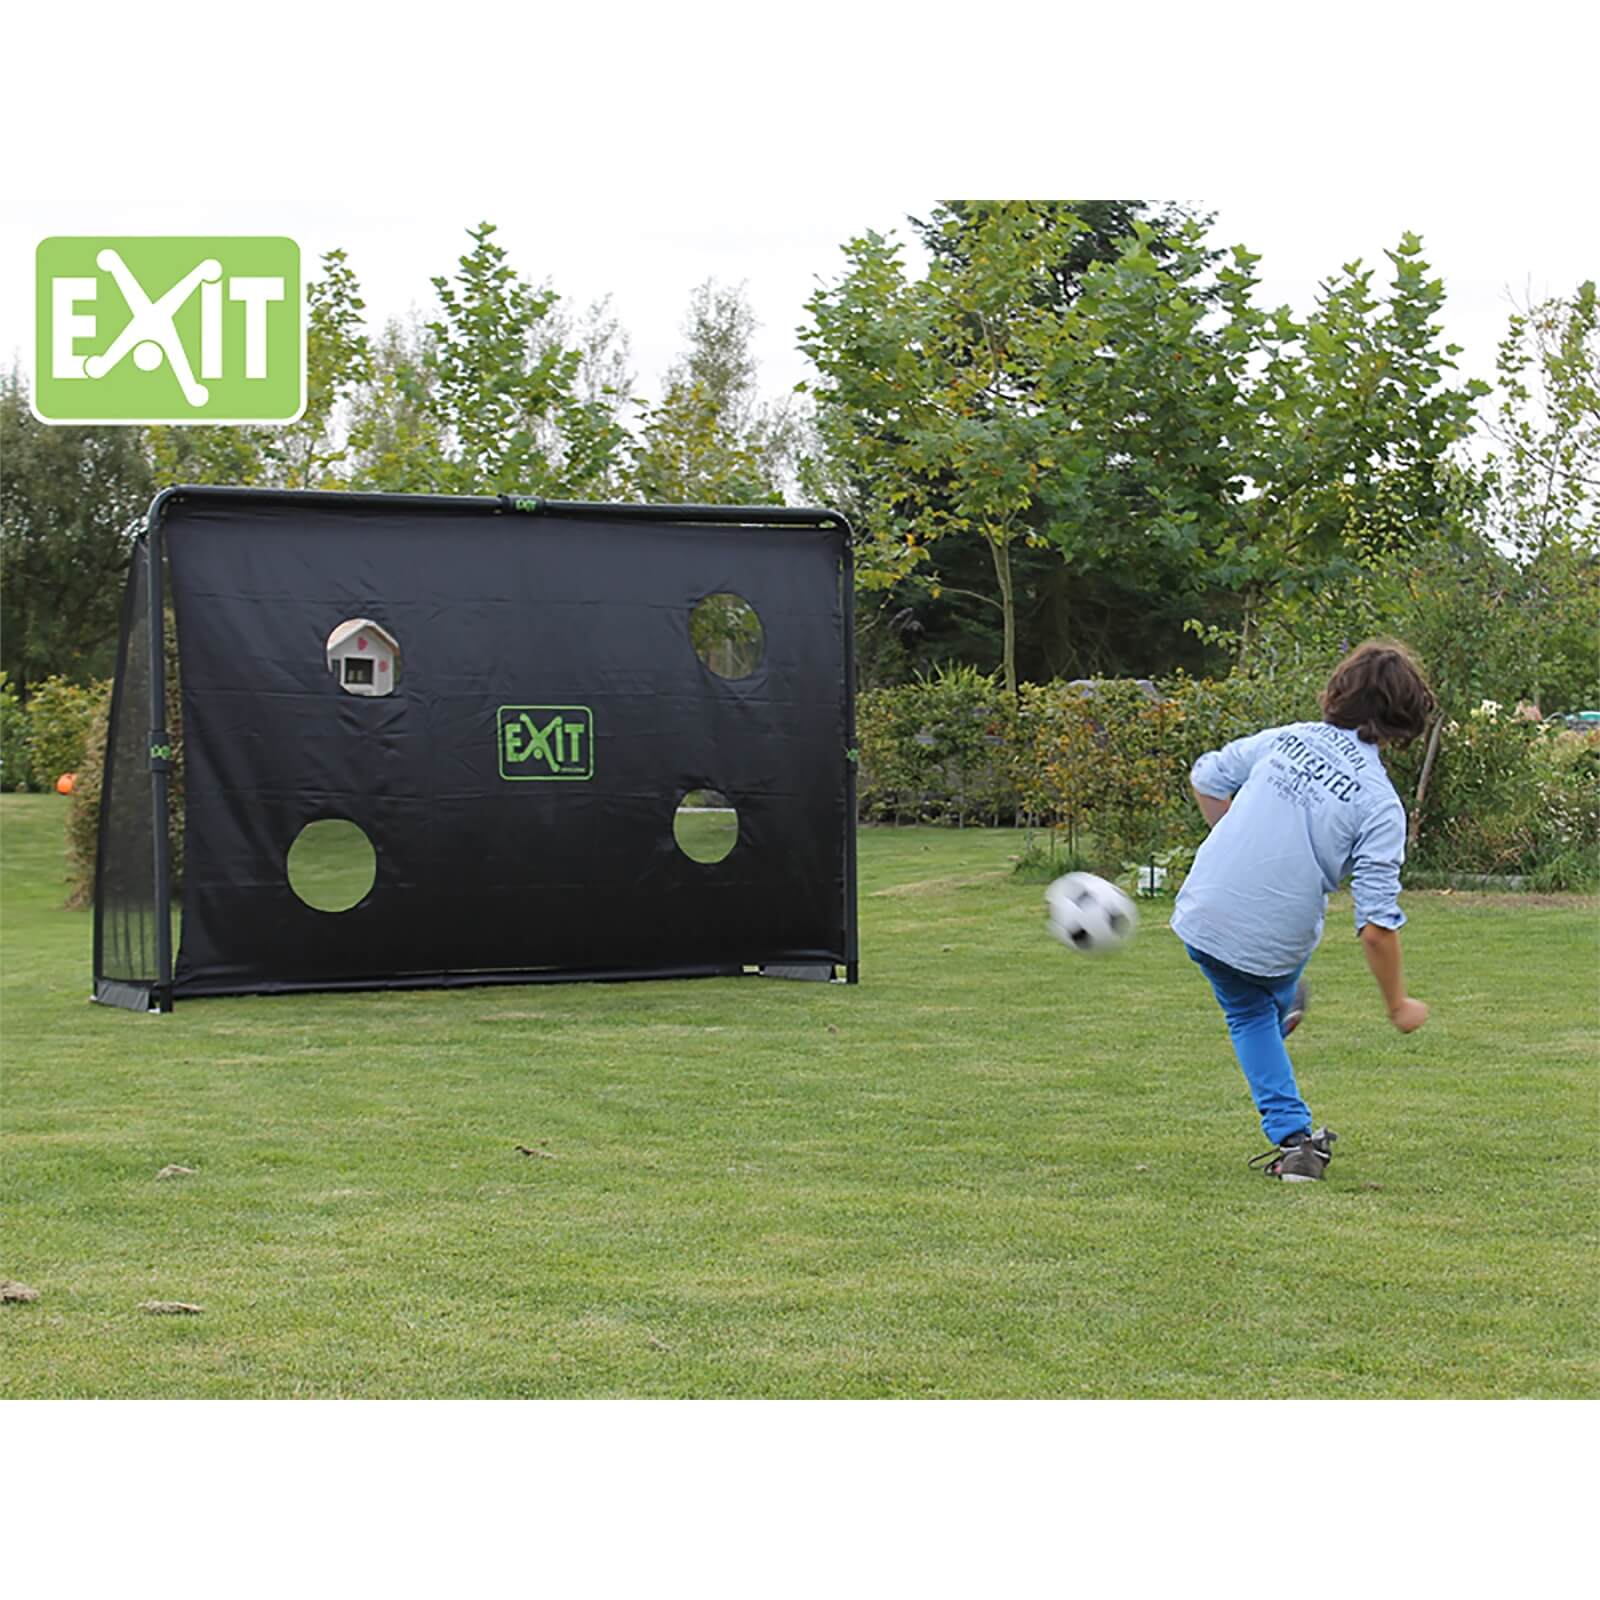 Exit Finta Soccer Goal